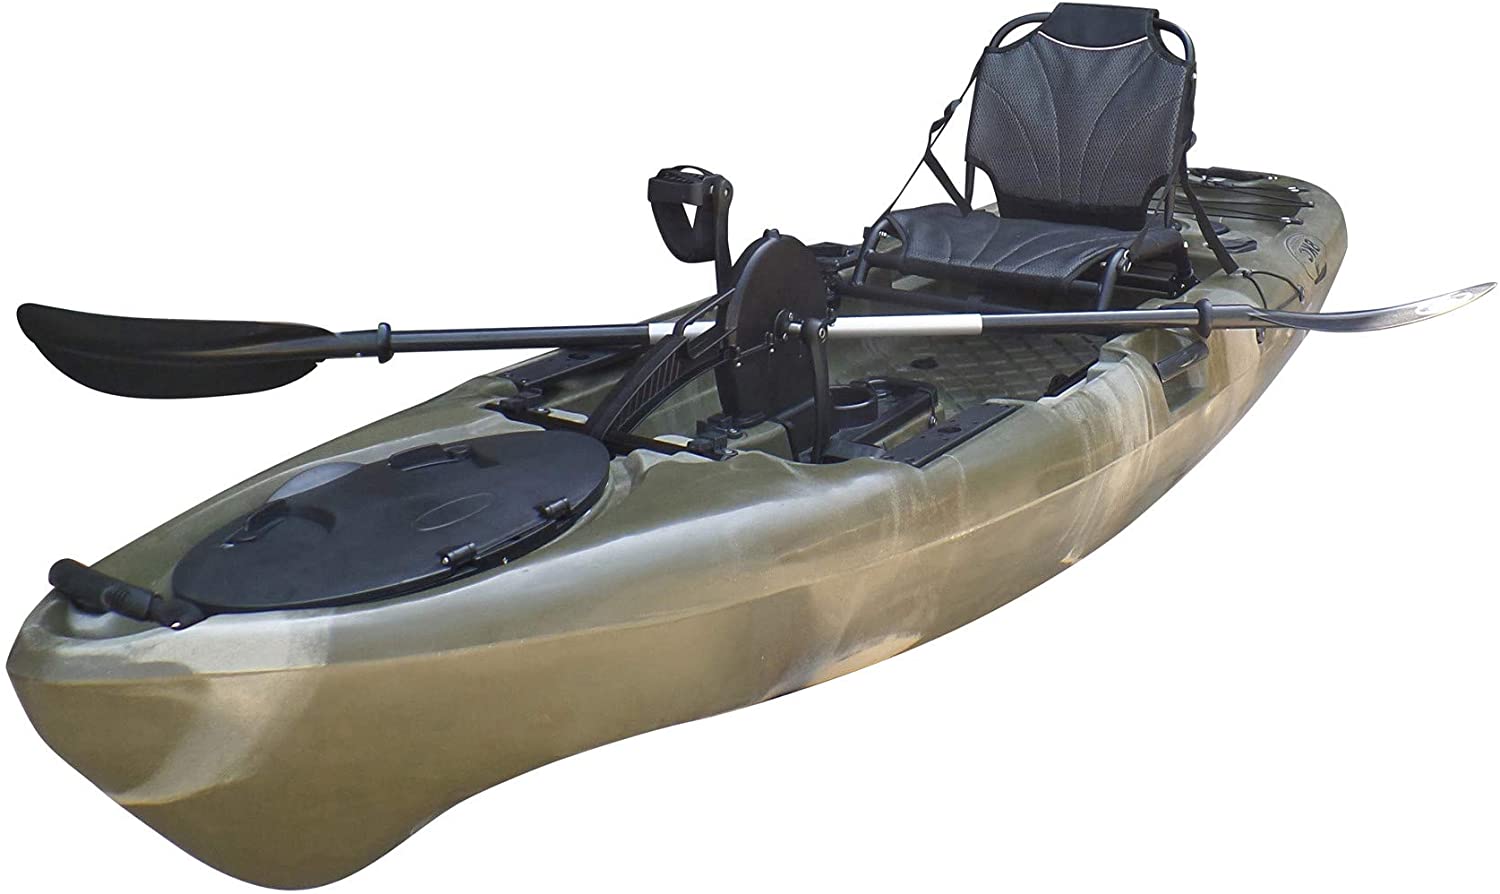 The Kayak Pro BKC PK11 Review